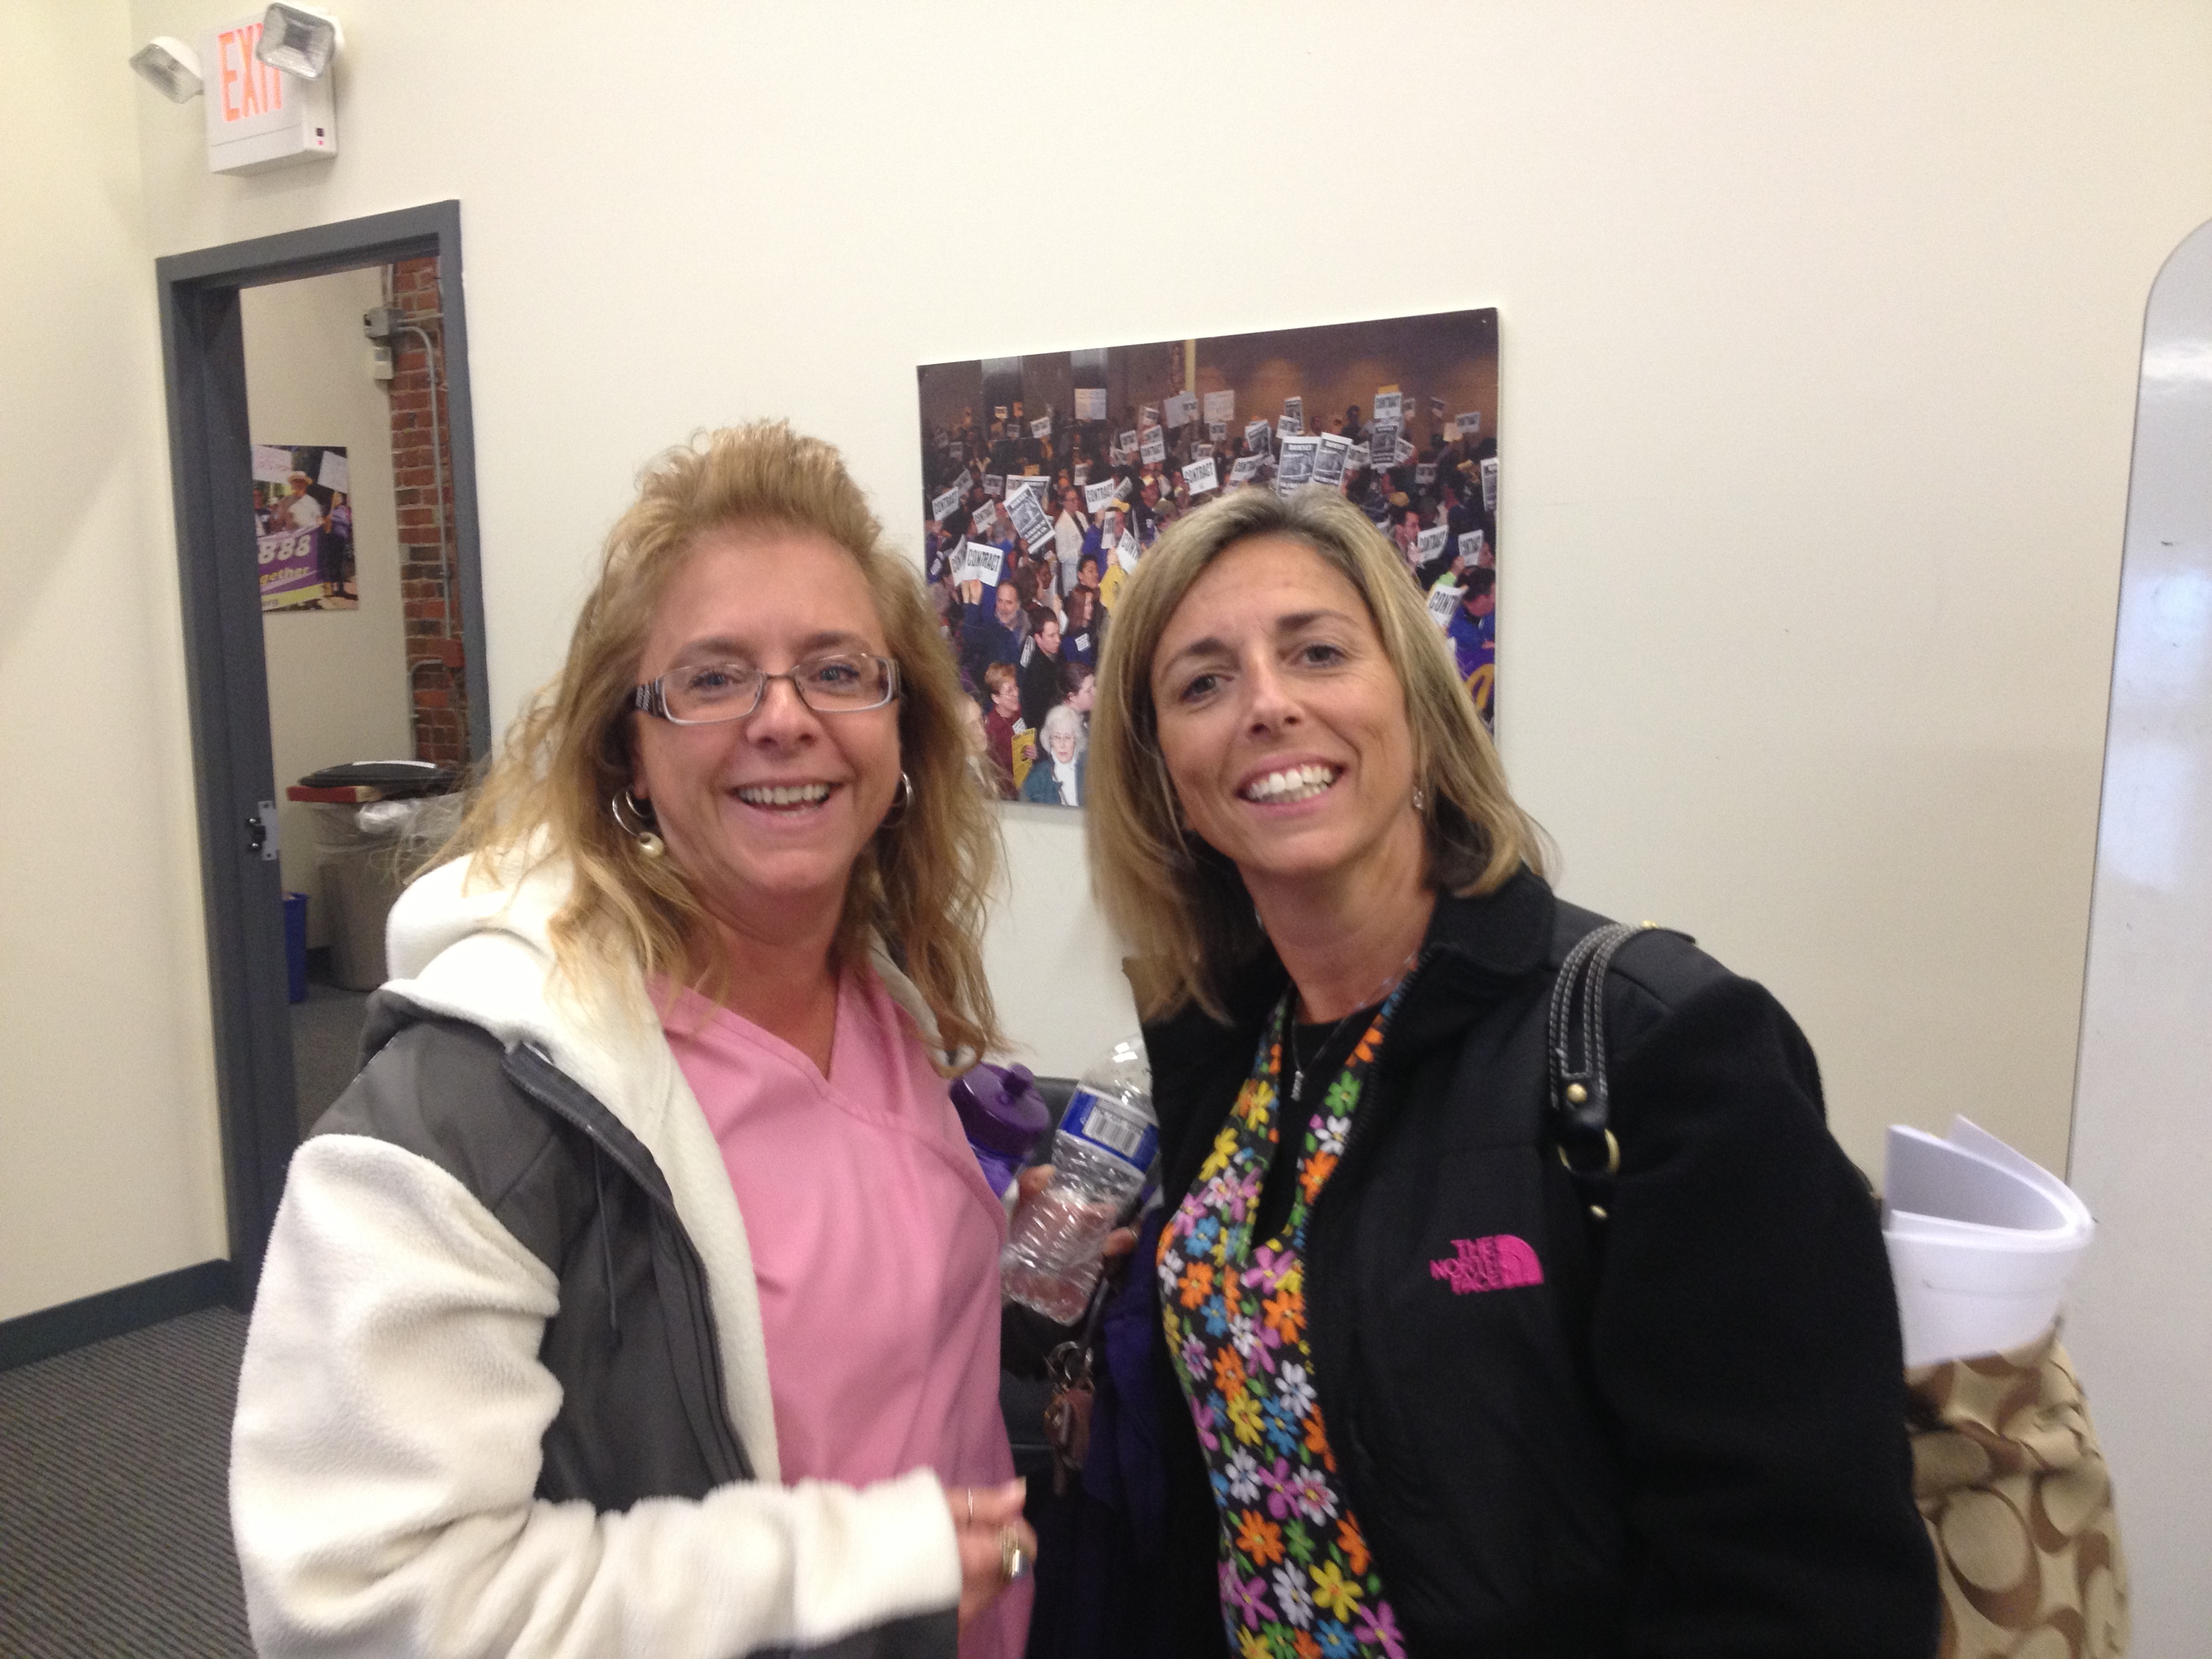 Everett School nurses Angela Ciaramaglia and Christen Piscatelli